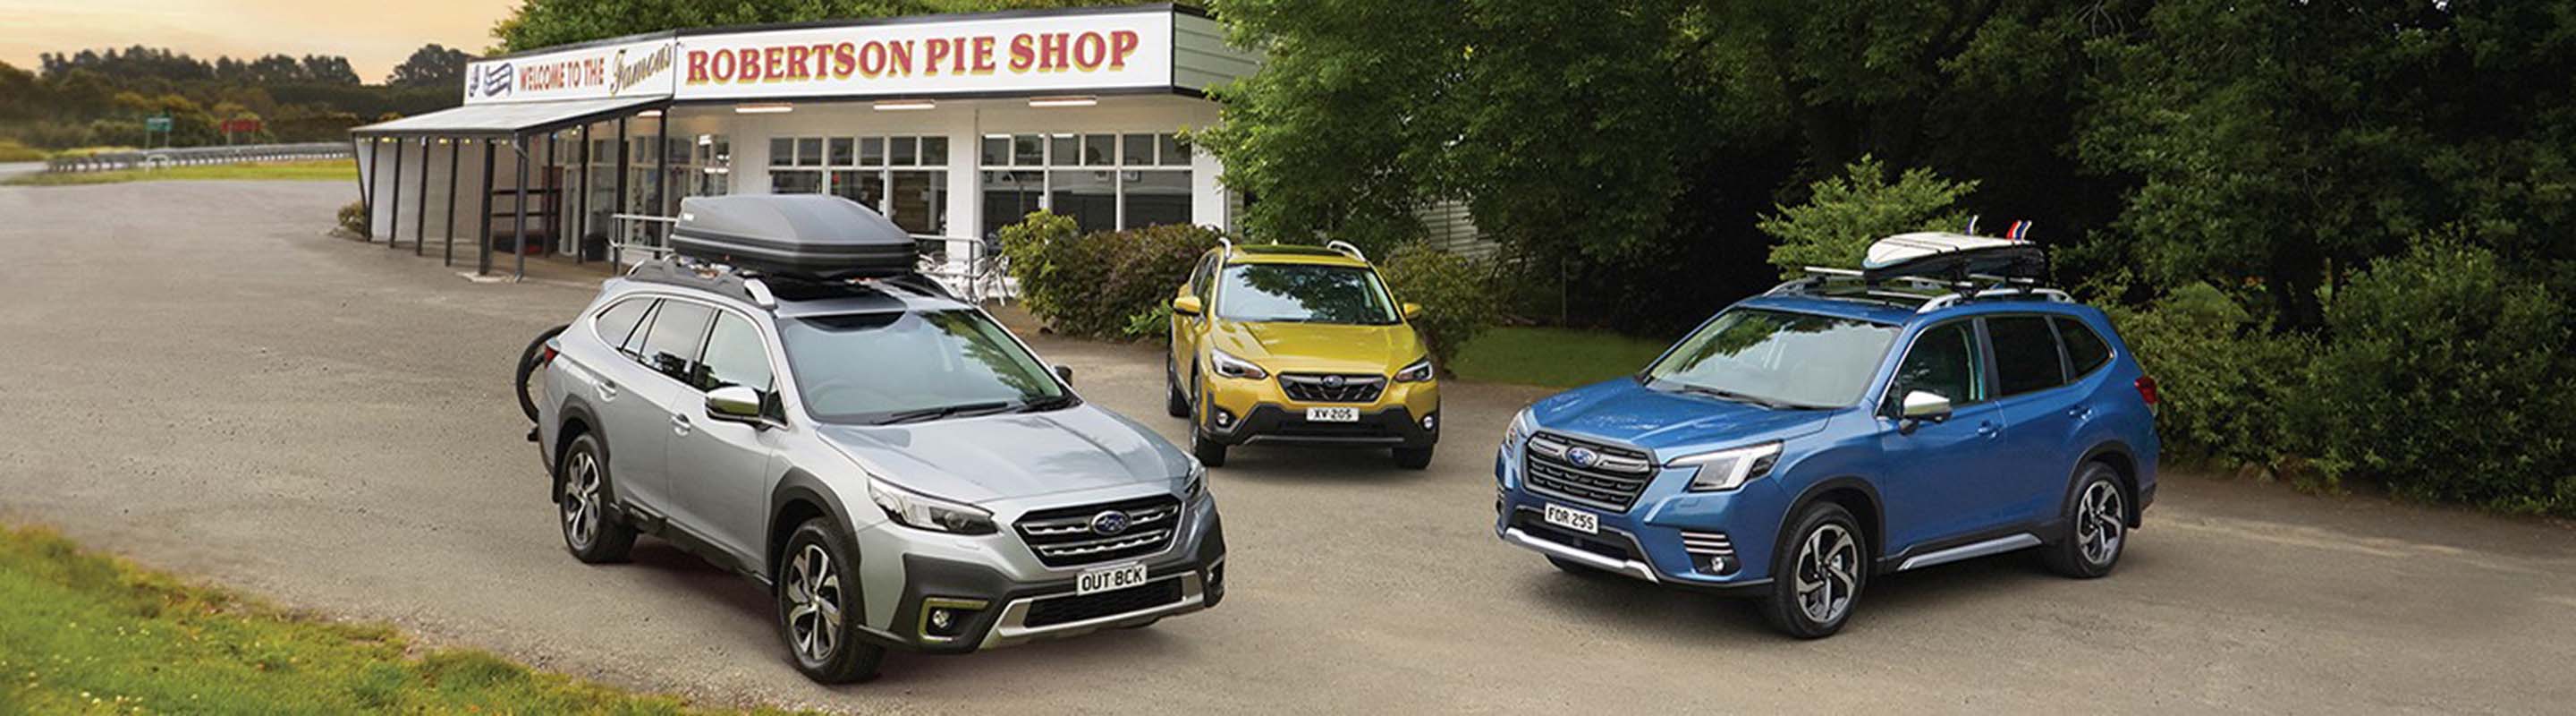 Subaru owners most satisfied in Roy Morgan Annual Customer Satisfaction Awards